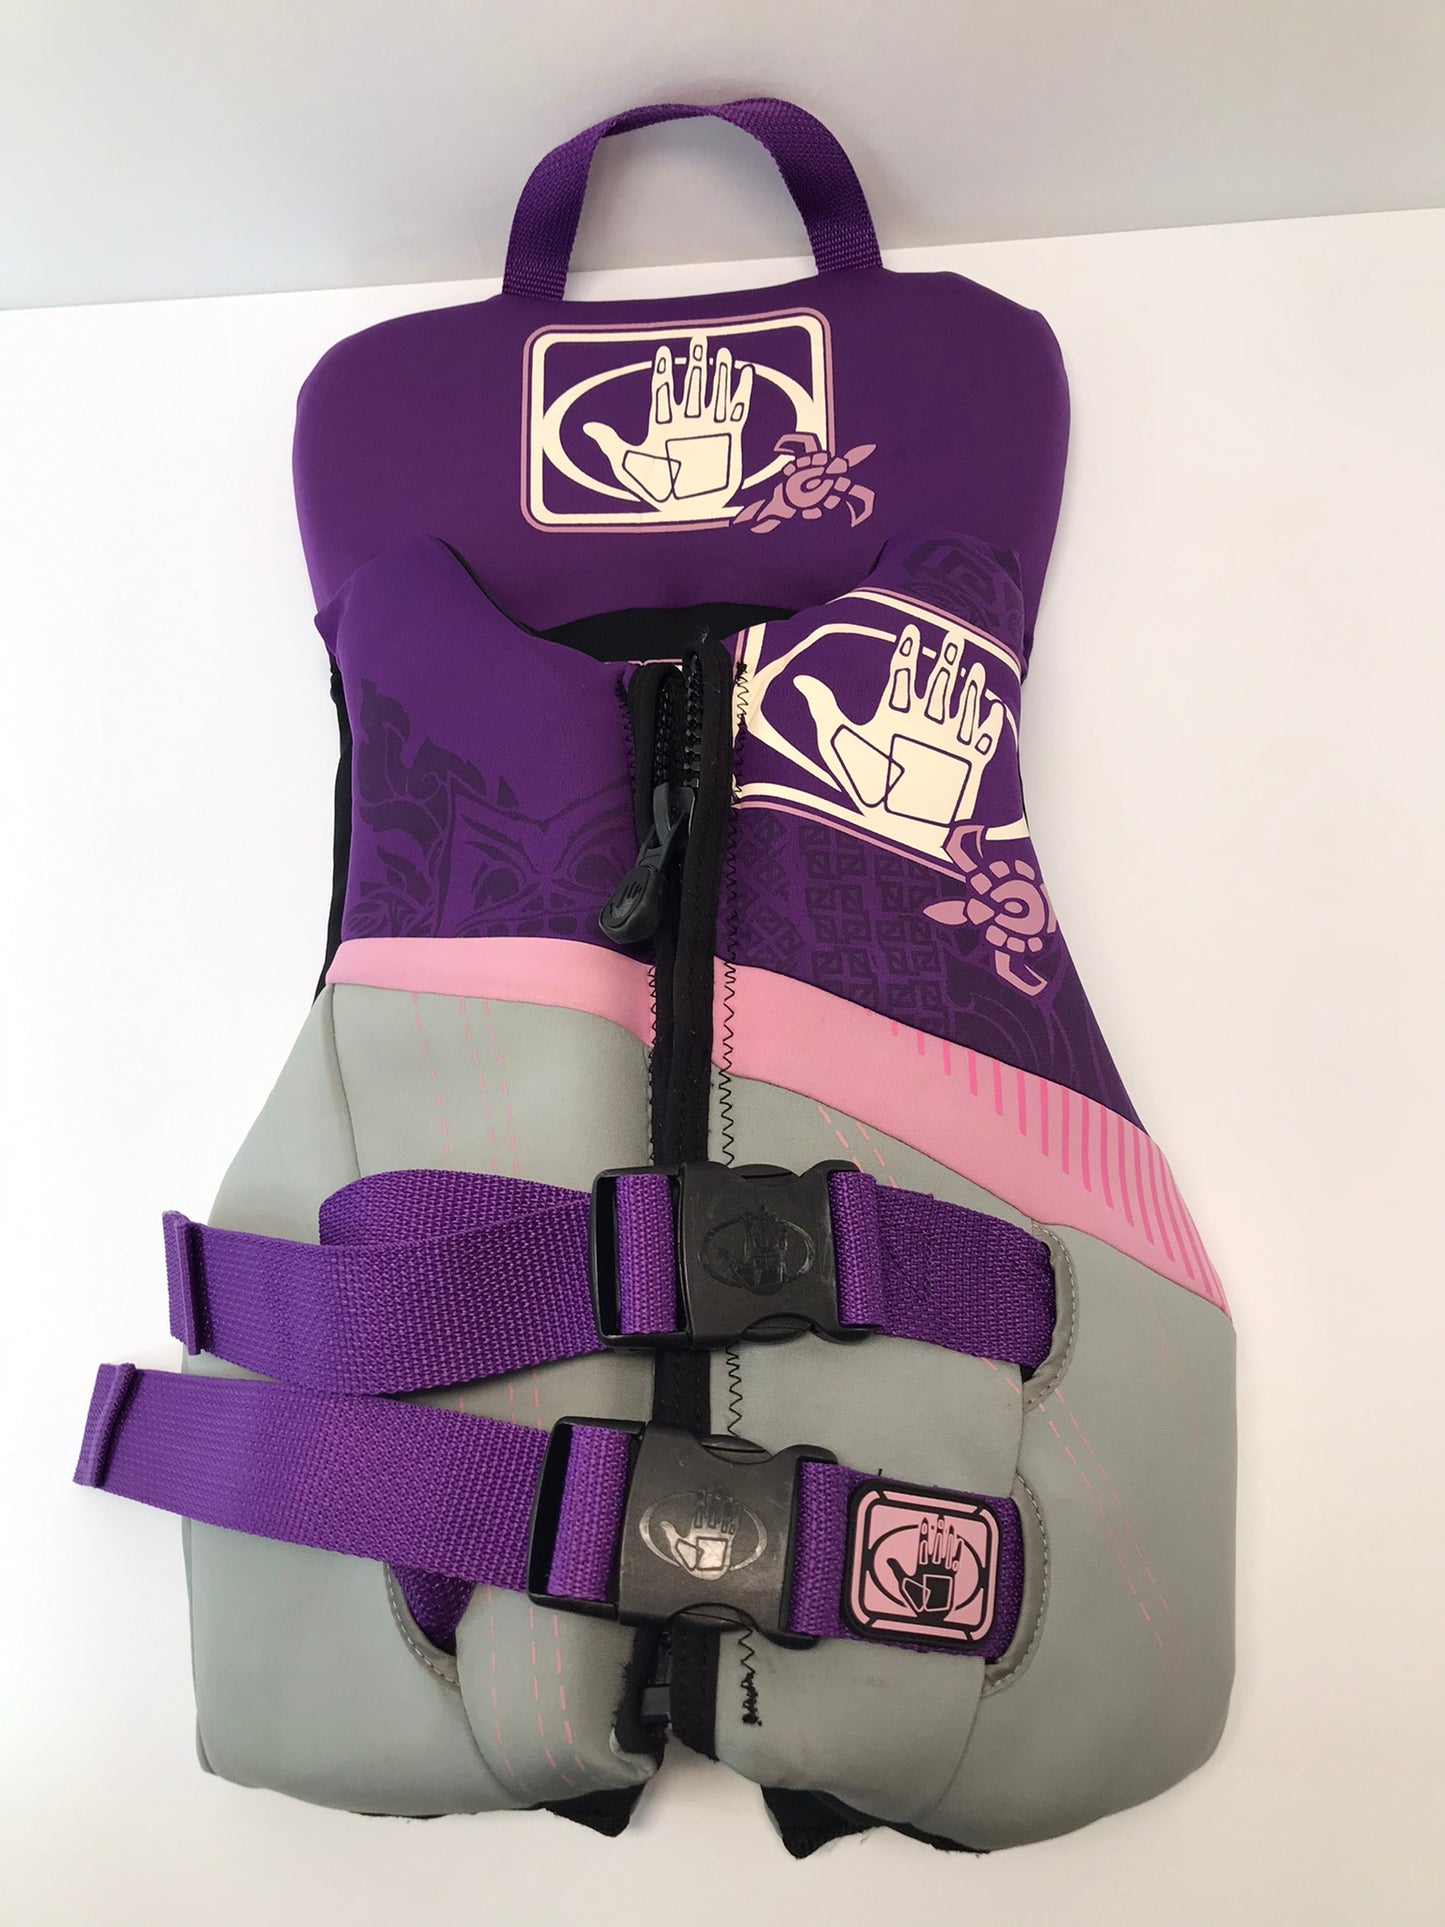 Life Jacket Child Size 60-90 lb Youth Body Glove Neoprene Purple Grey New Demo Model